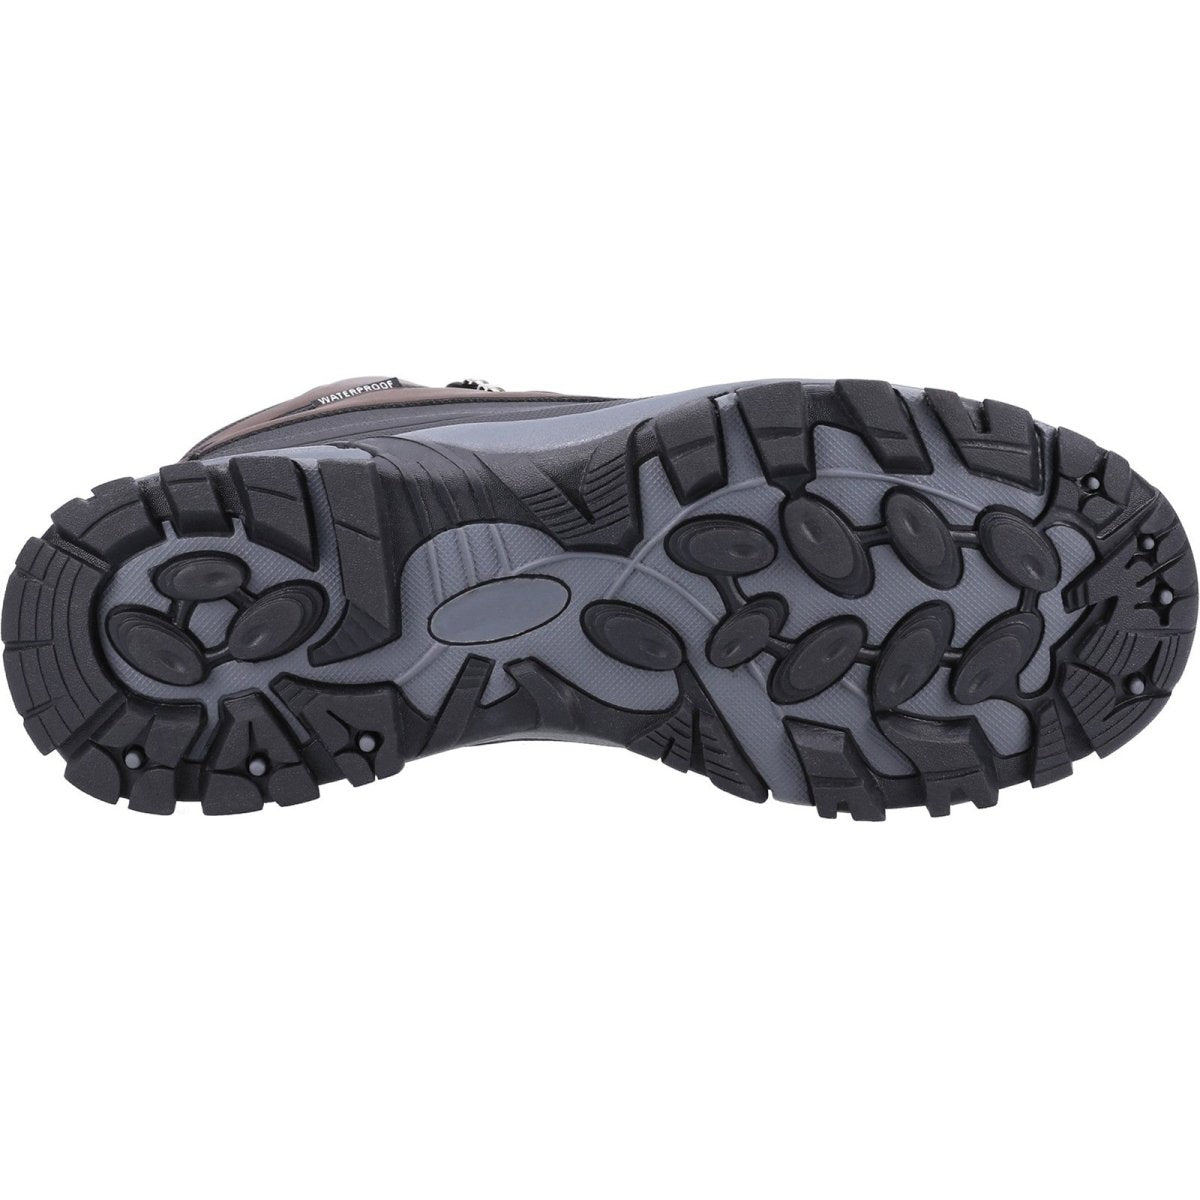 Cotswold Calmsden Mens Waterproof Lightweight Hiking Boots - Shoe Store Direct